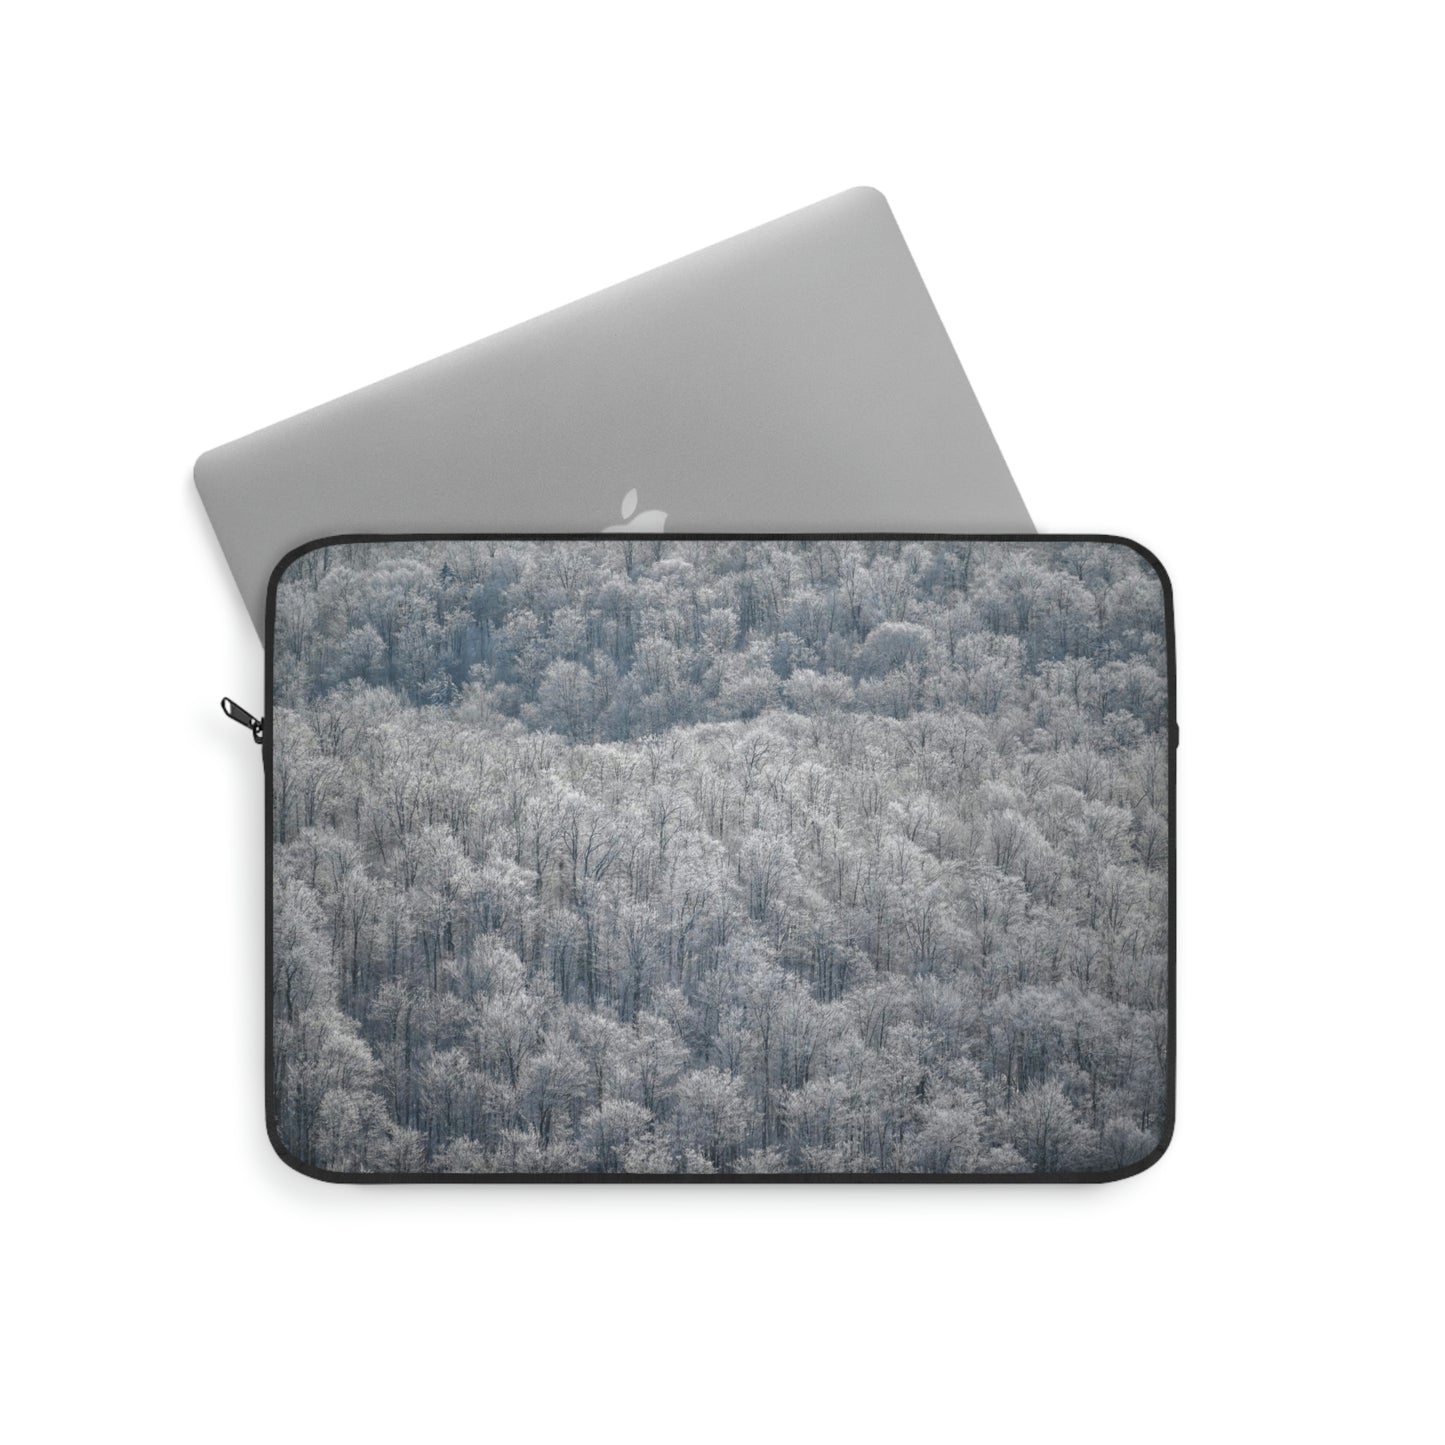 Laptop Sleeve - Frozen trees